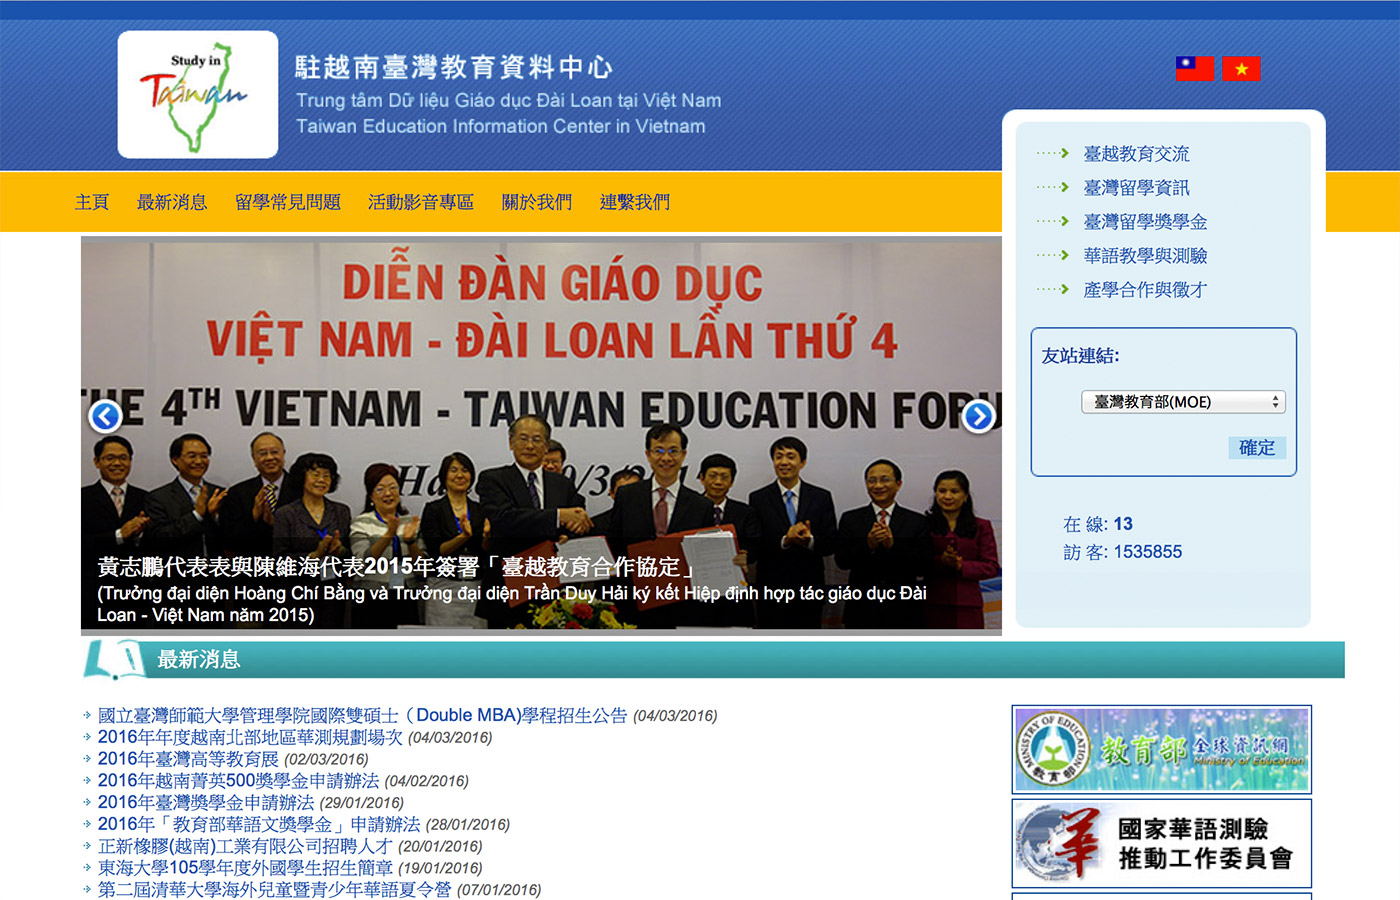 Taiwan Education Information Center in Vietnam